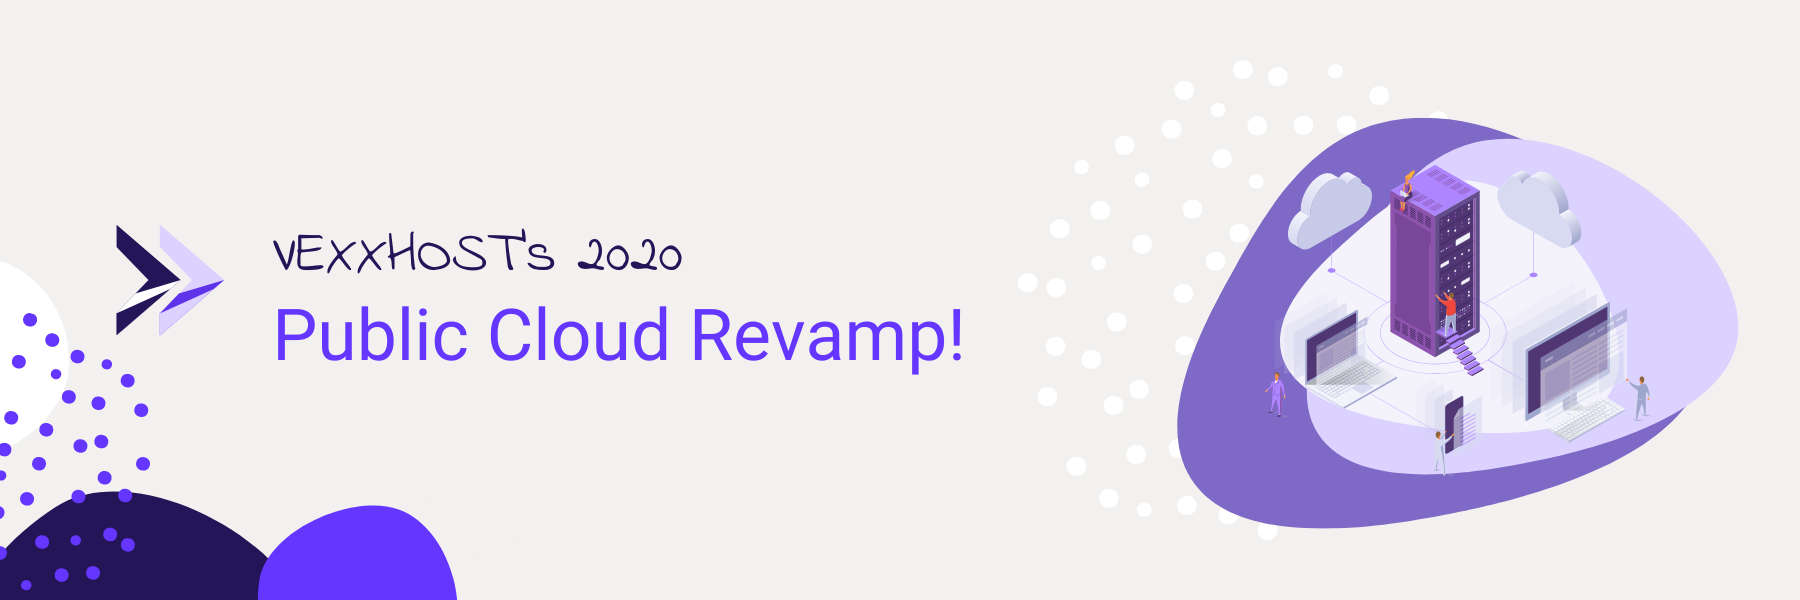 VEXXHOST 2020 Public Cloud Revamp